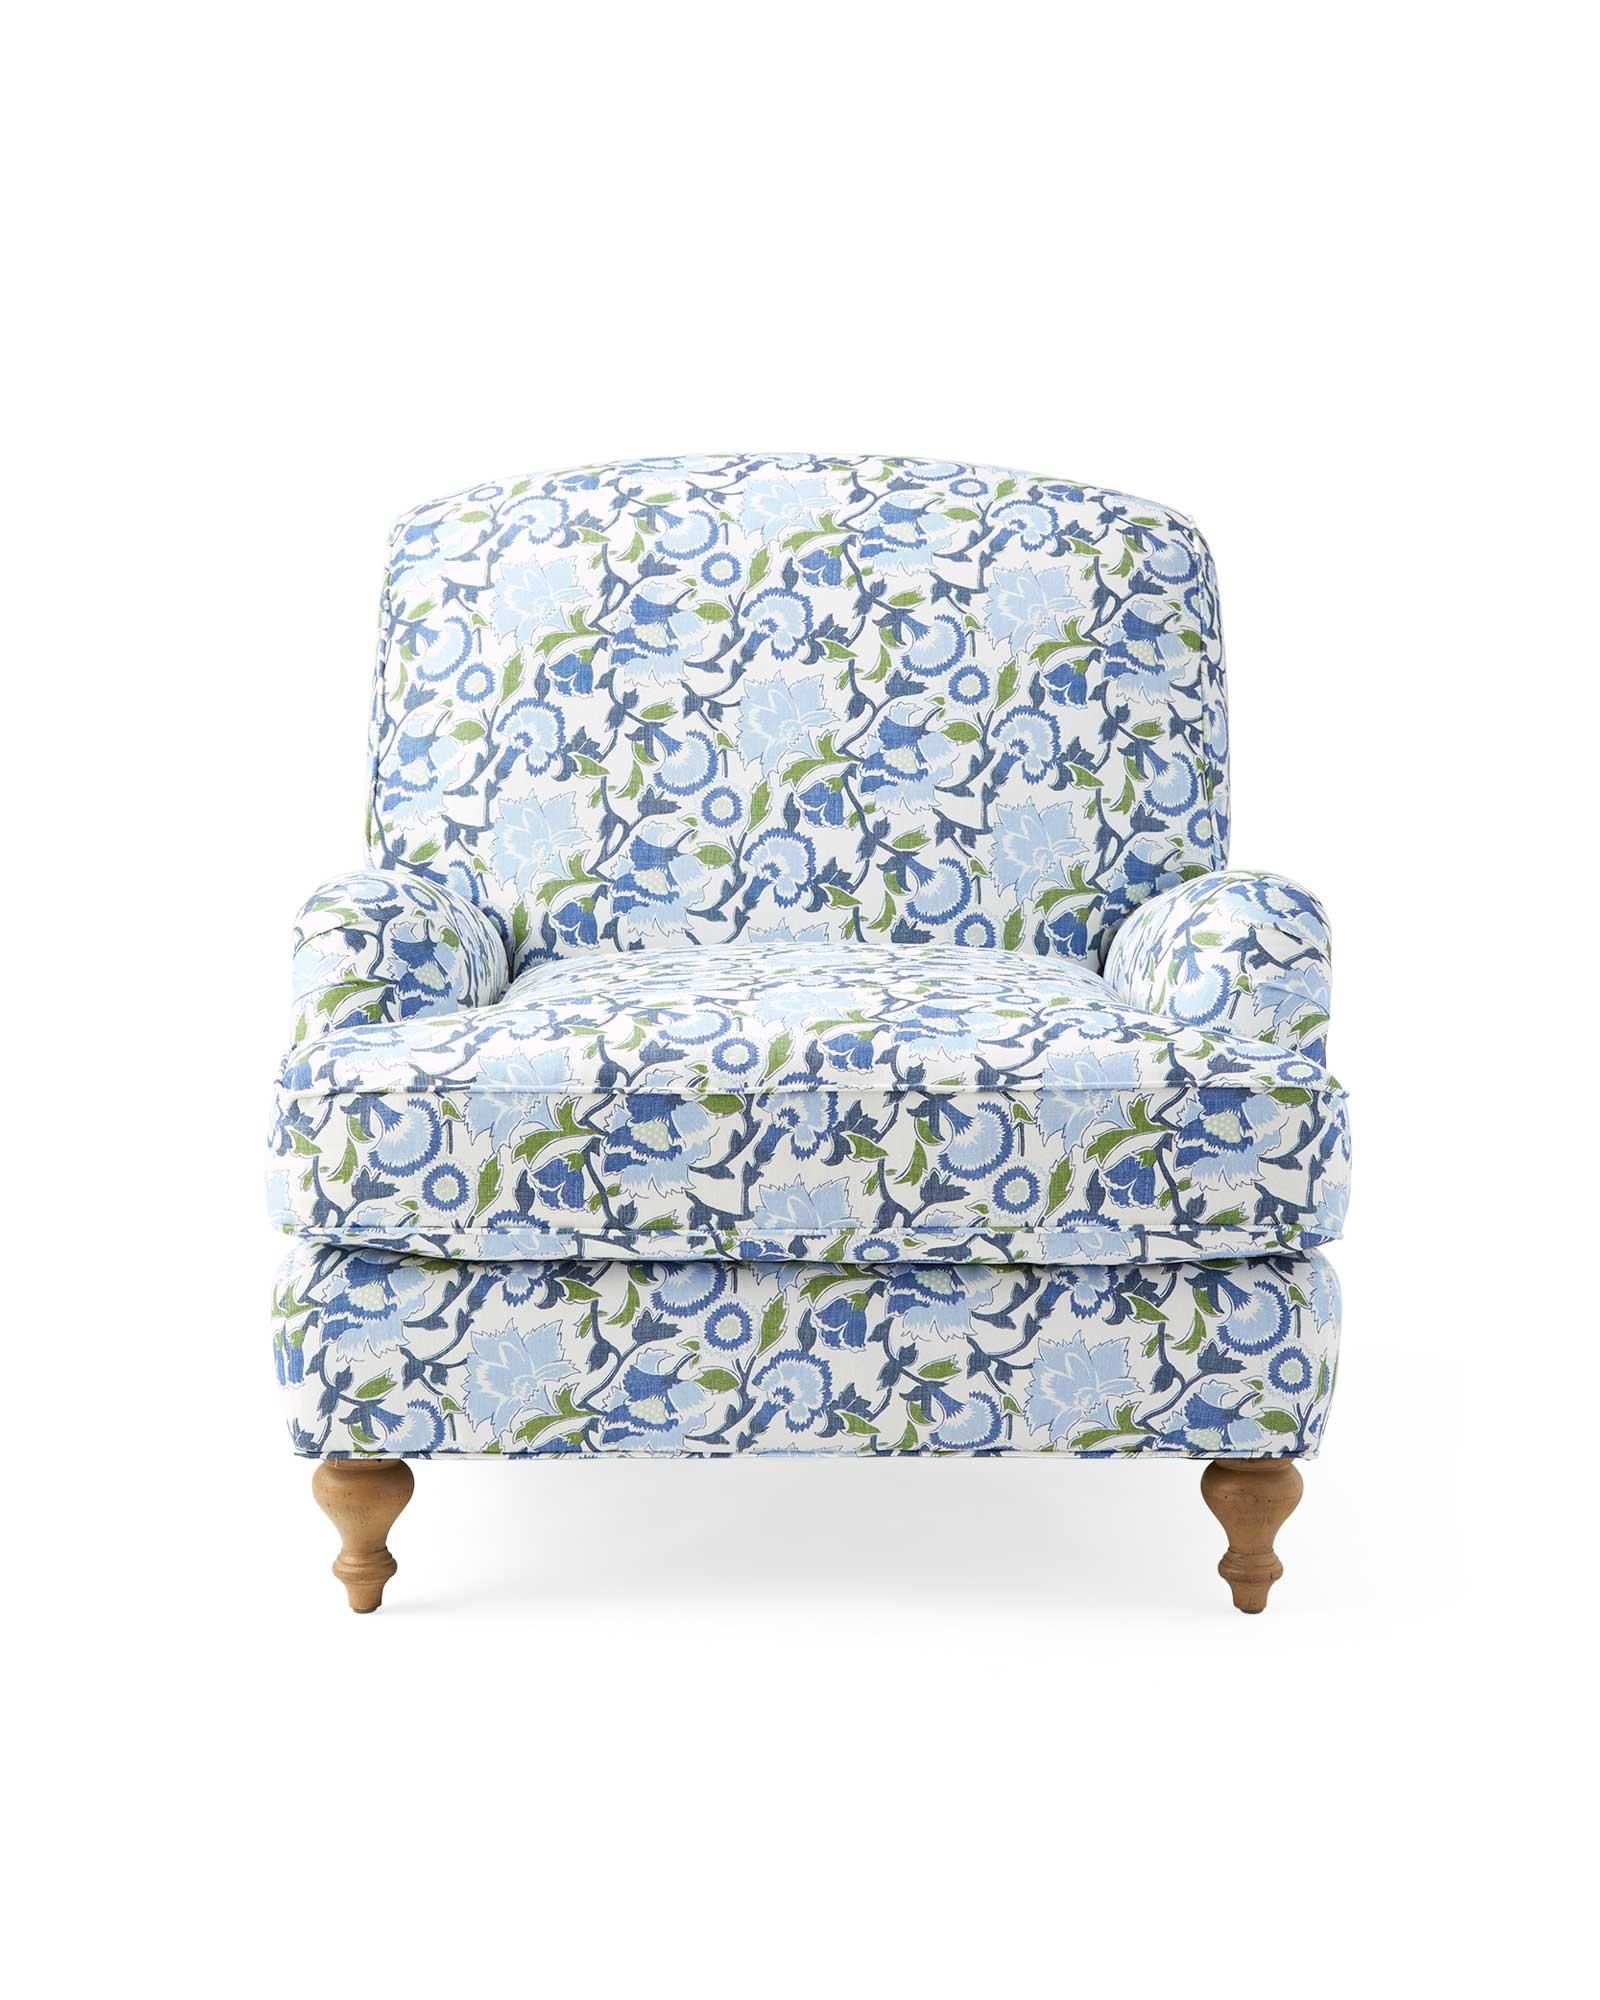 Miramar Chair - Cassis Linen Hydrangea | Serena and Lily